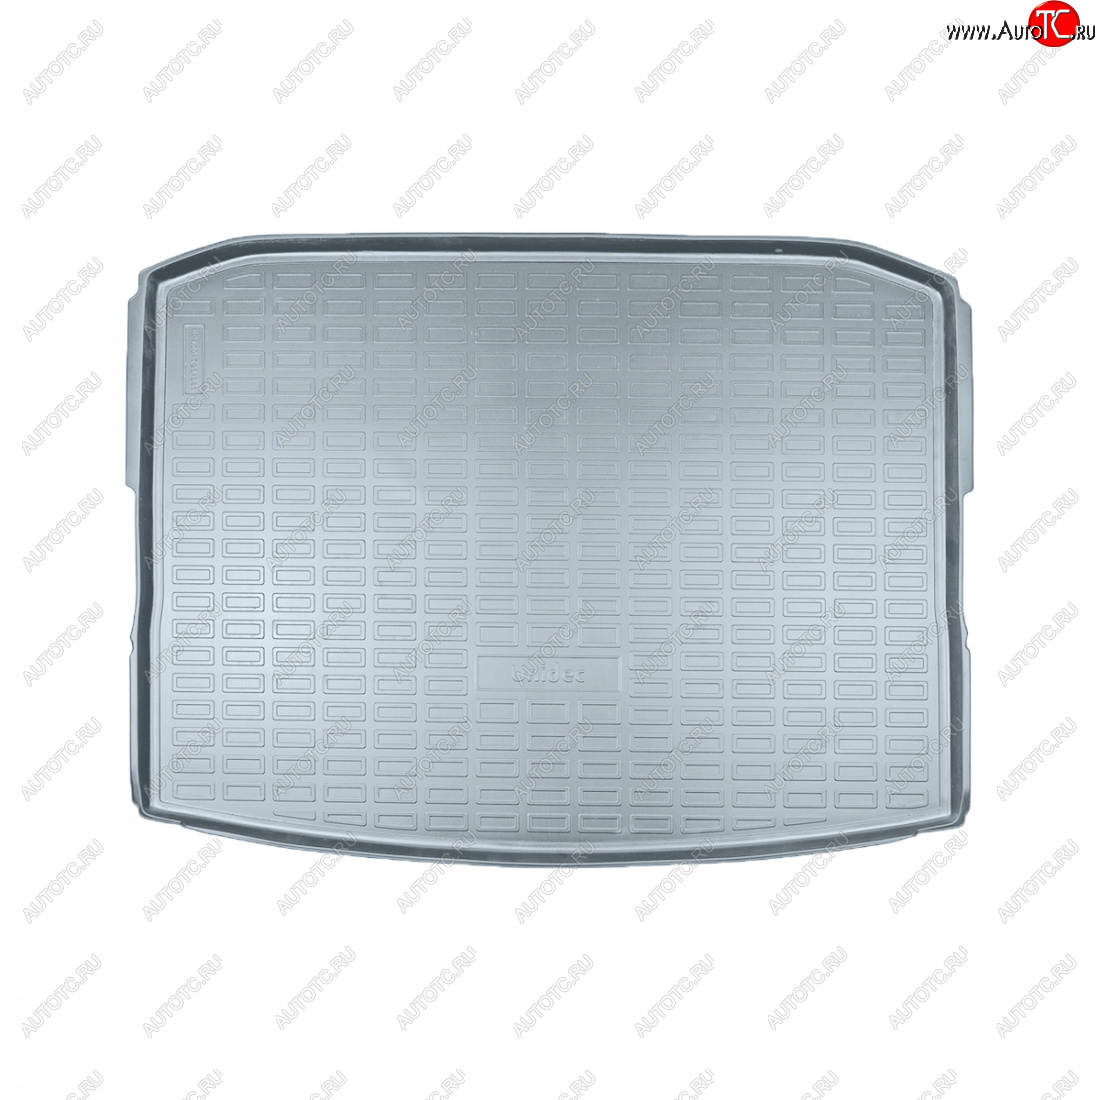 1 979 р. Коврик багажника Norplast Unidec (монопривод)  Volkswagen Taos (2020-2022) (серый)